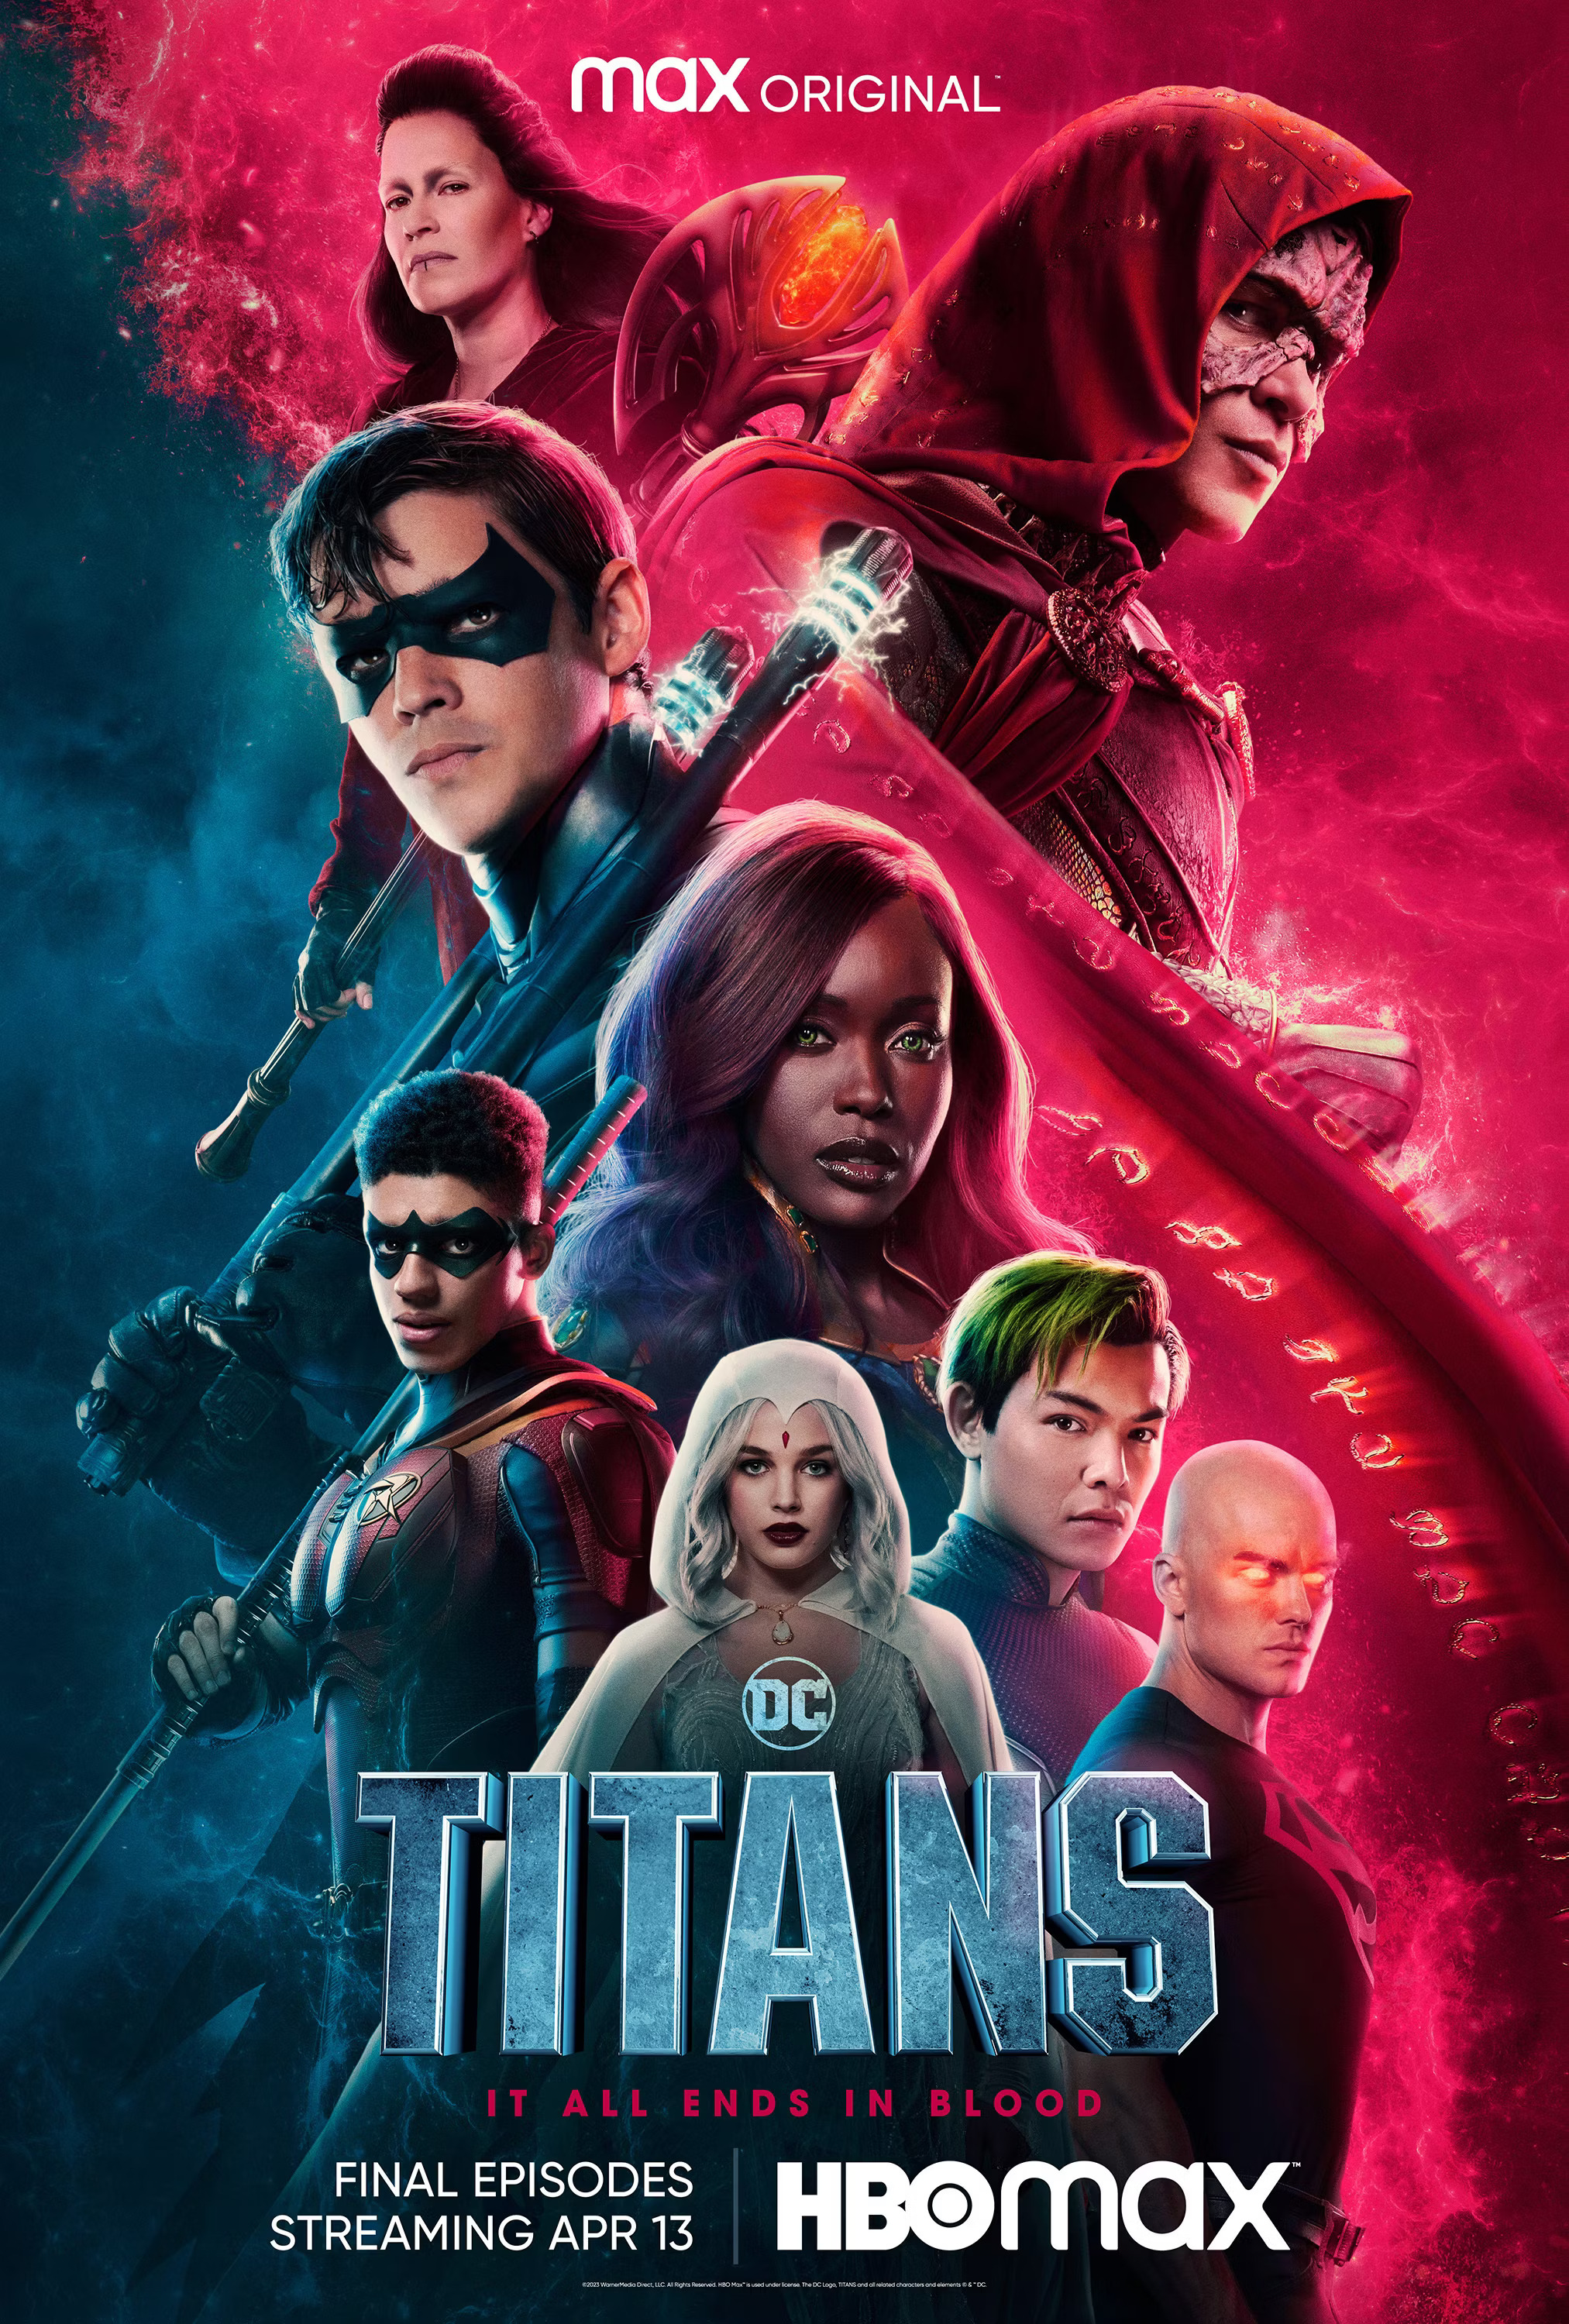 Mega Sized TV Poster Image for Titans (#19 of 19)